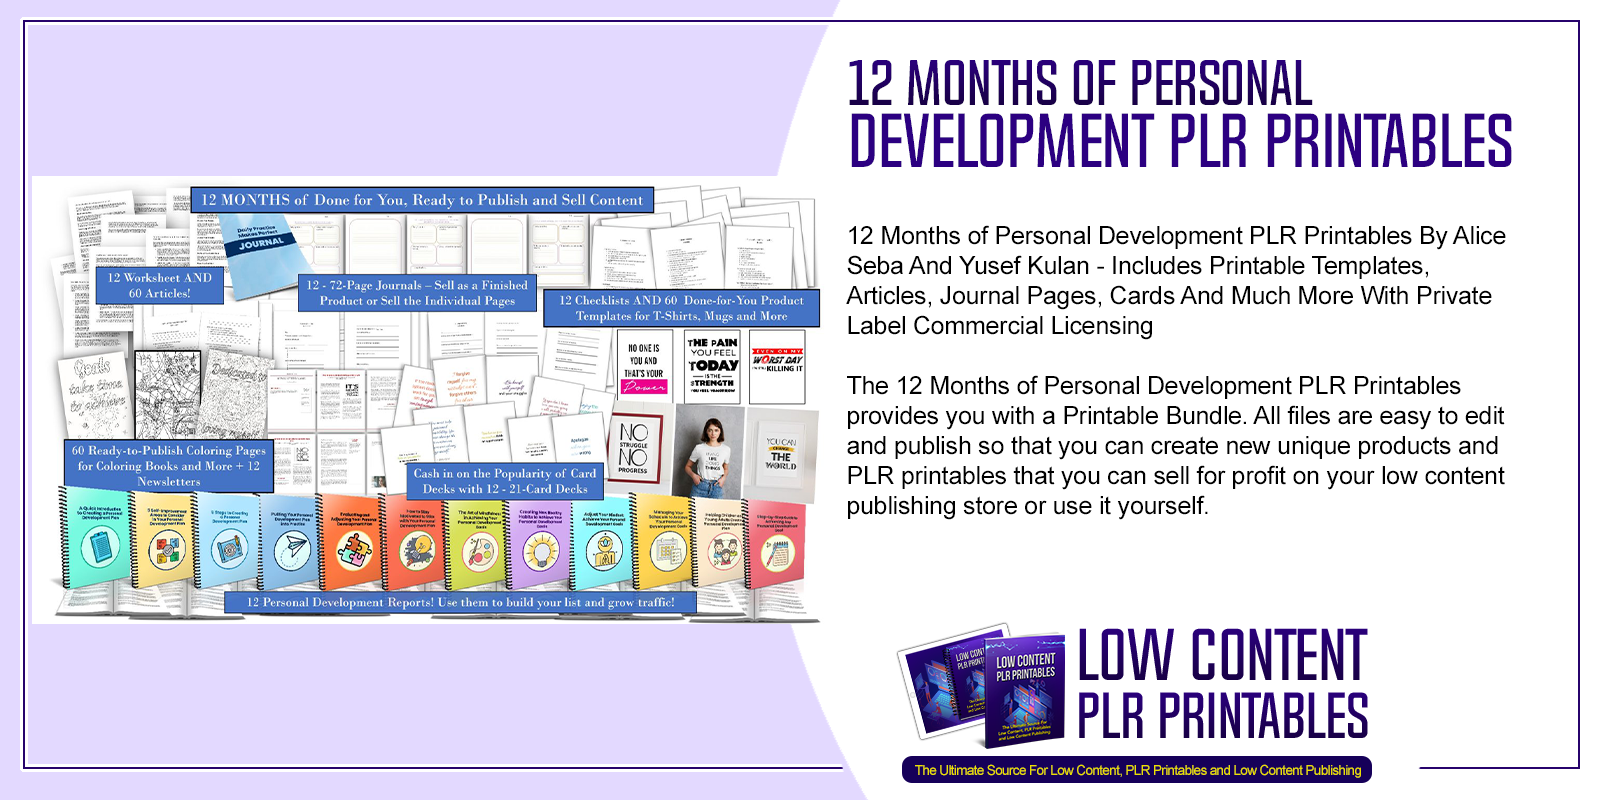 12 Months of Personal Development PLR Printables